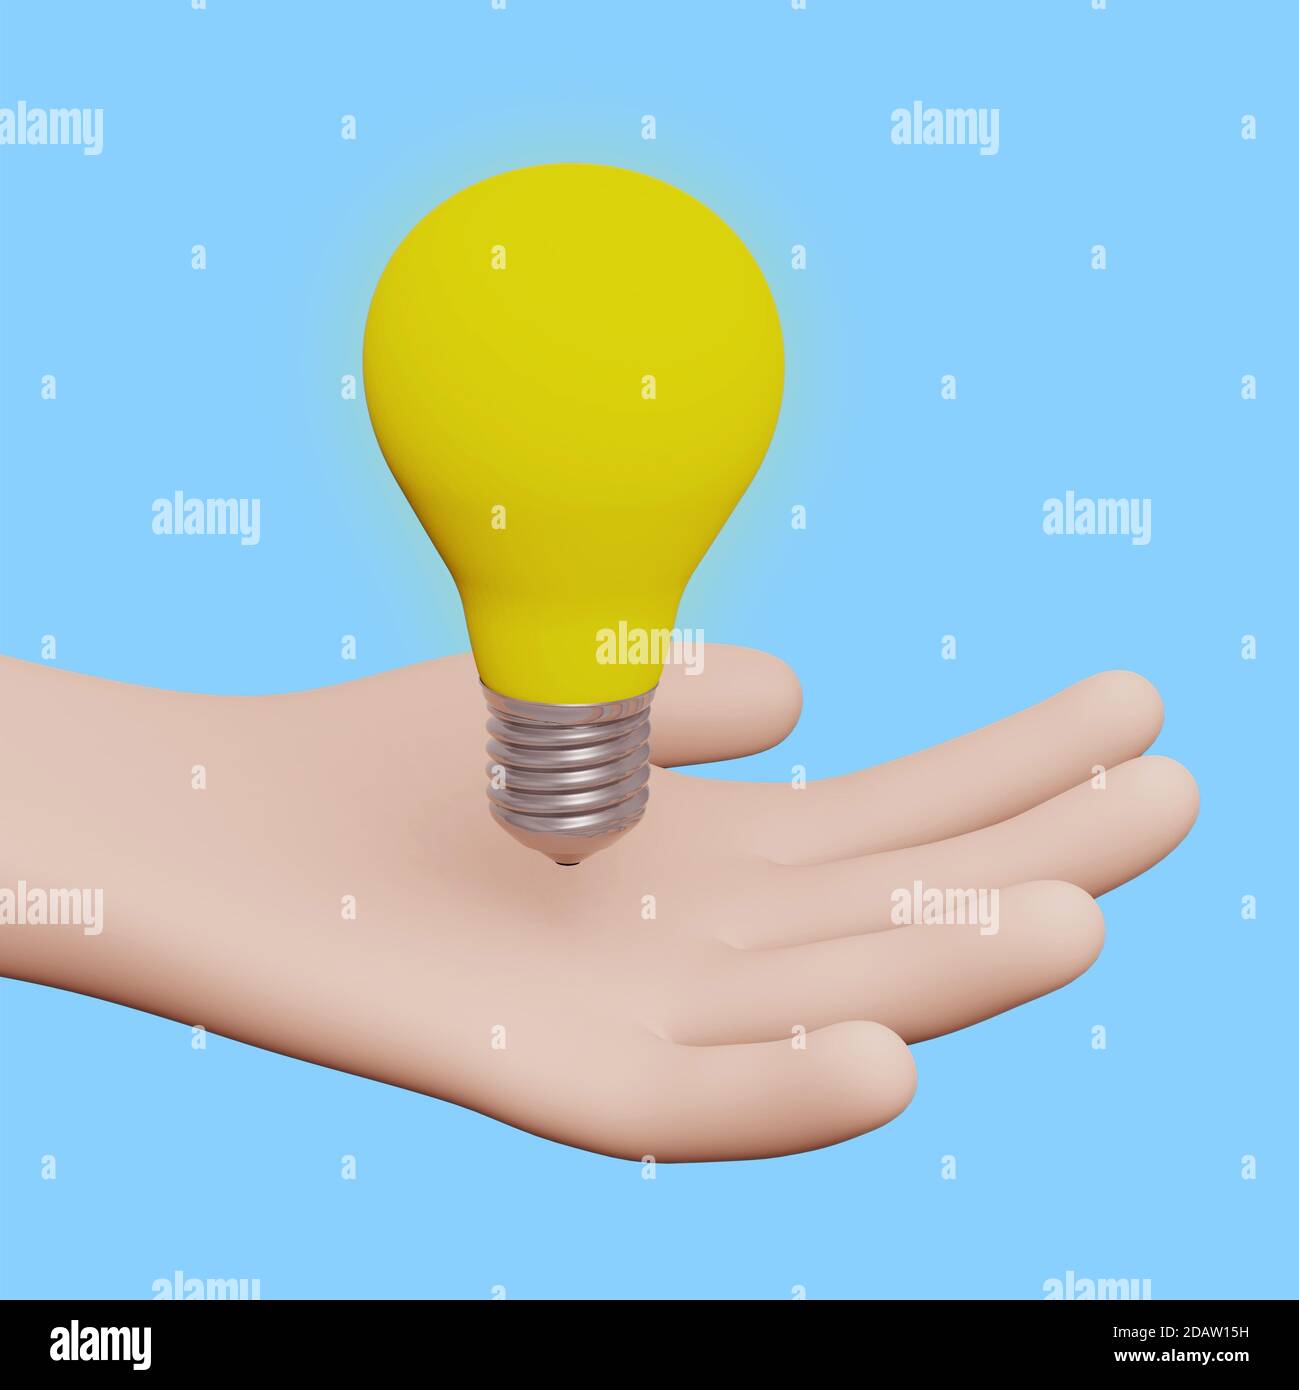 Bulb hand idea lamp innovation inspiration creativity 3D illustration Stock Photo